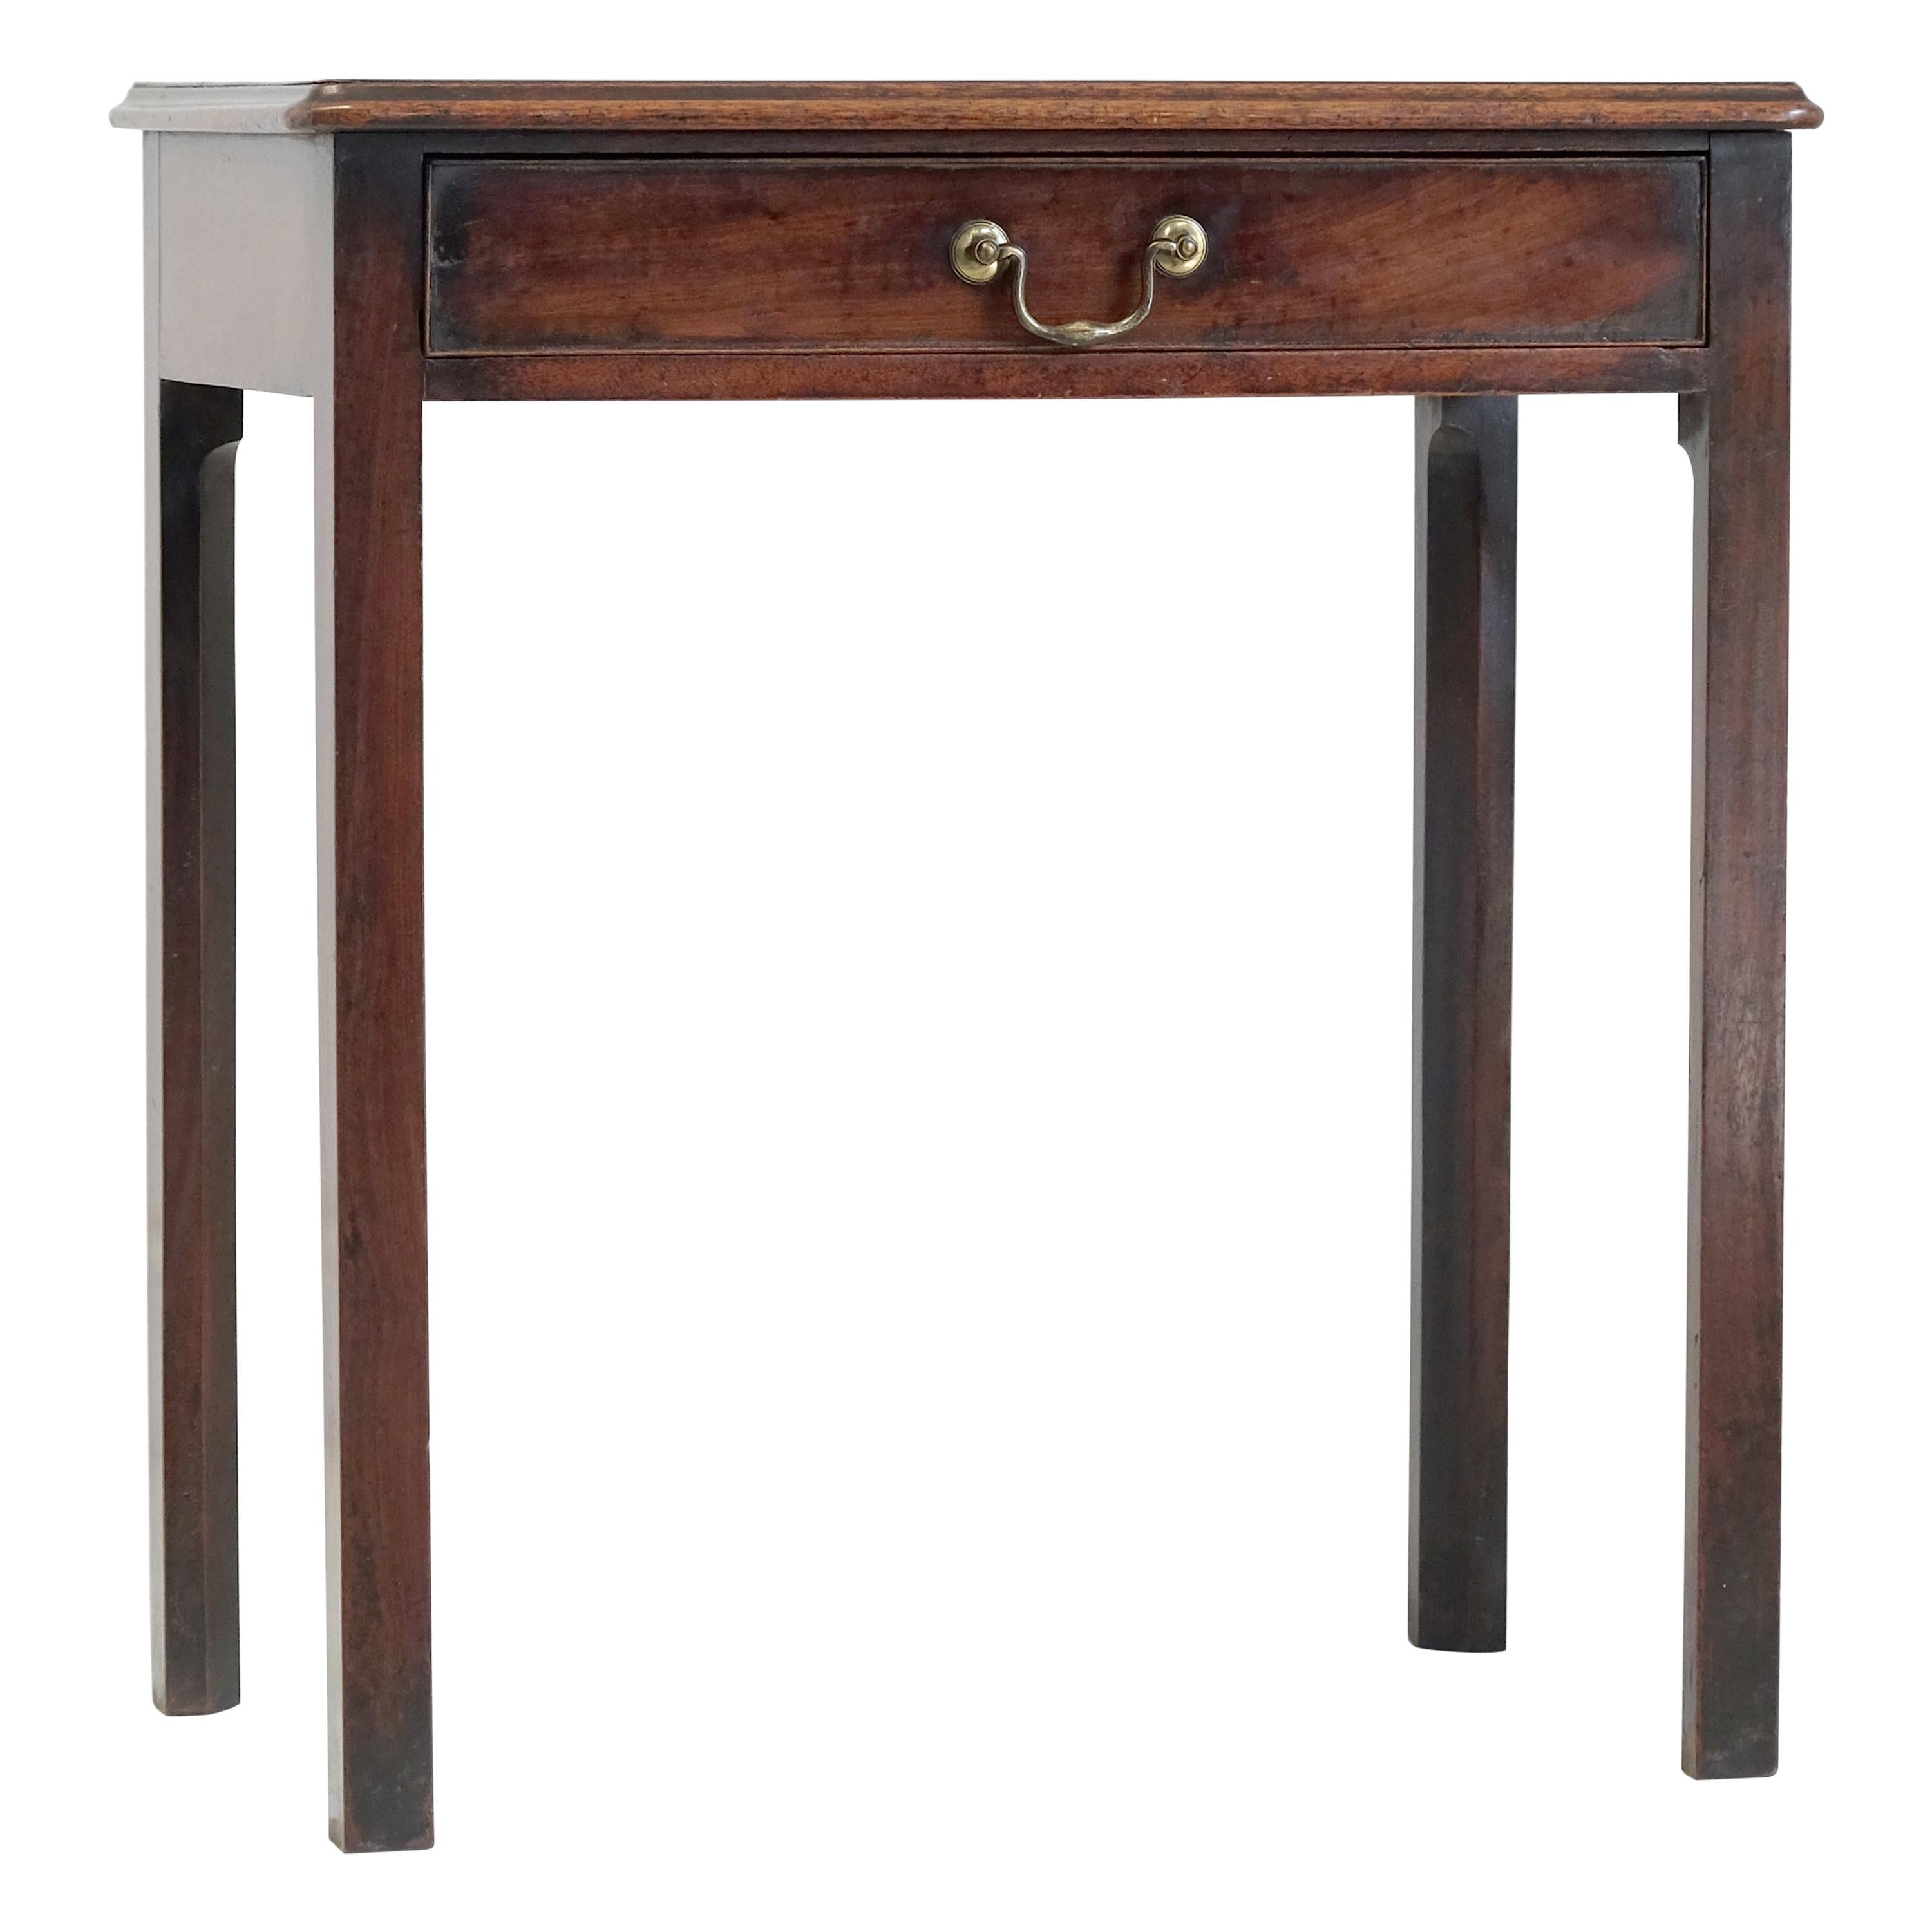 Georgian Mahogany Side Table, English, Simple Design, Small, Early 19th Century